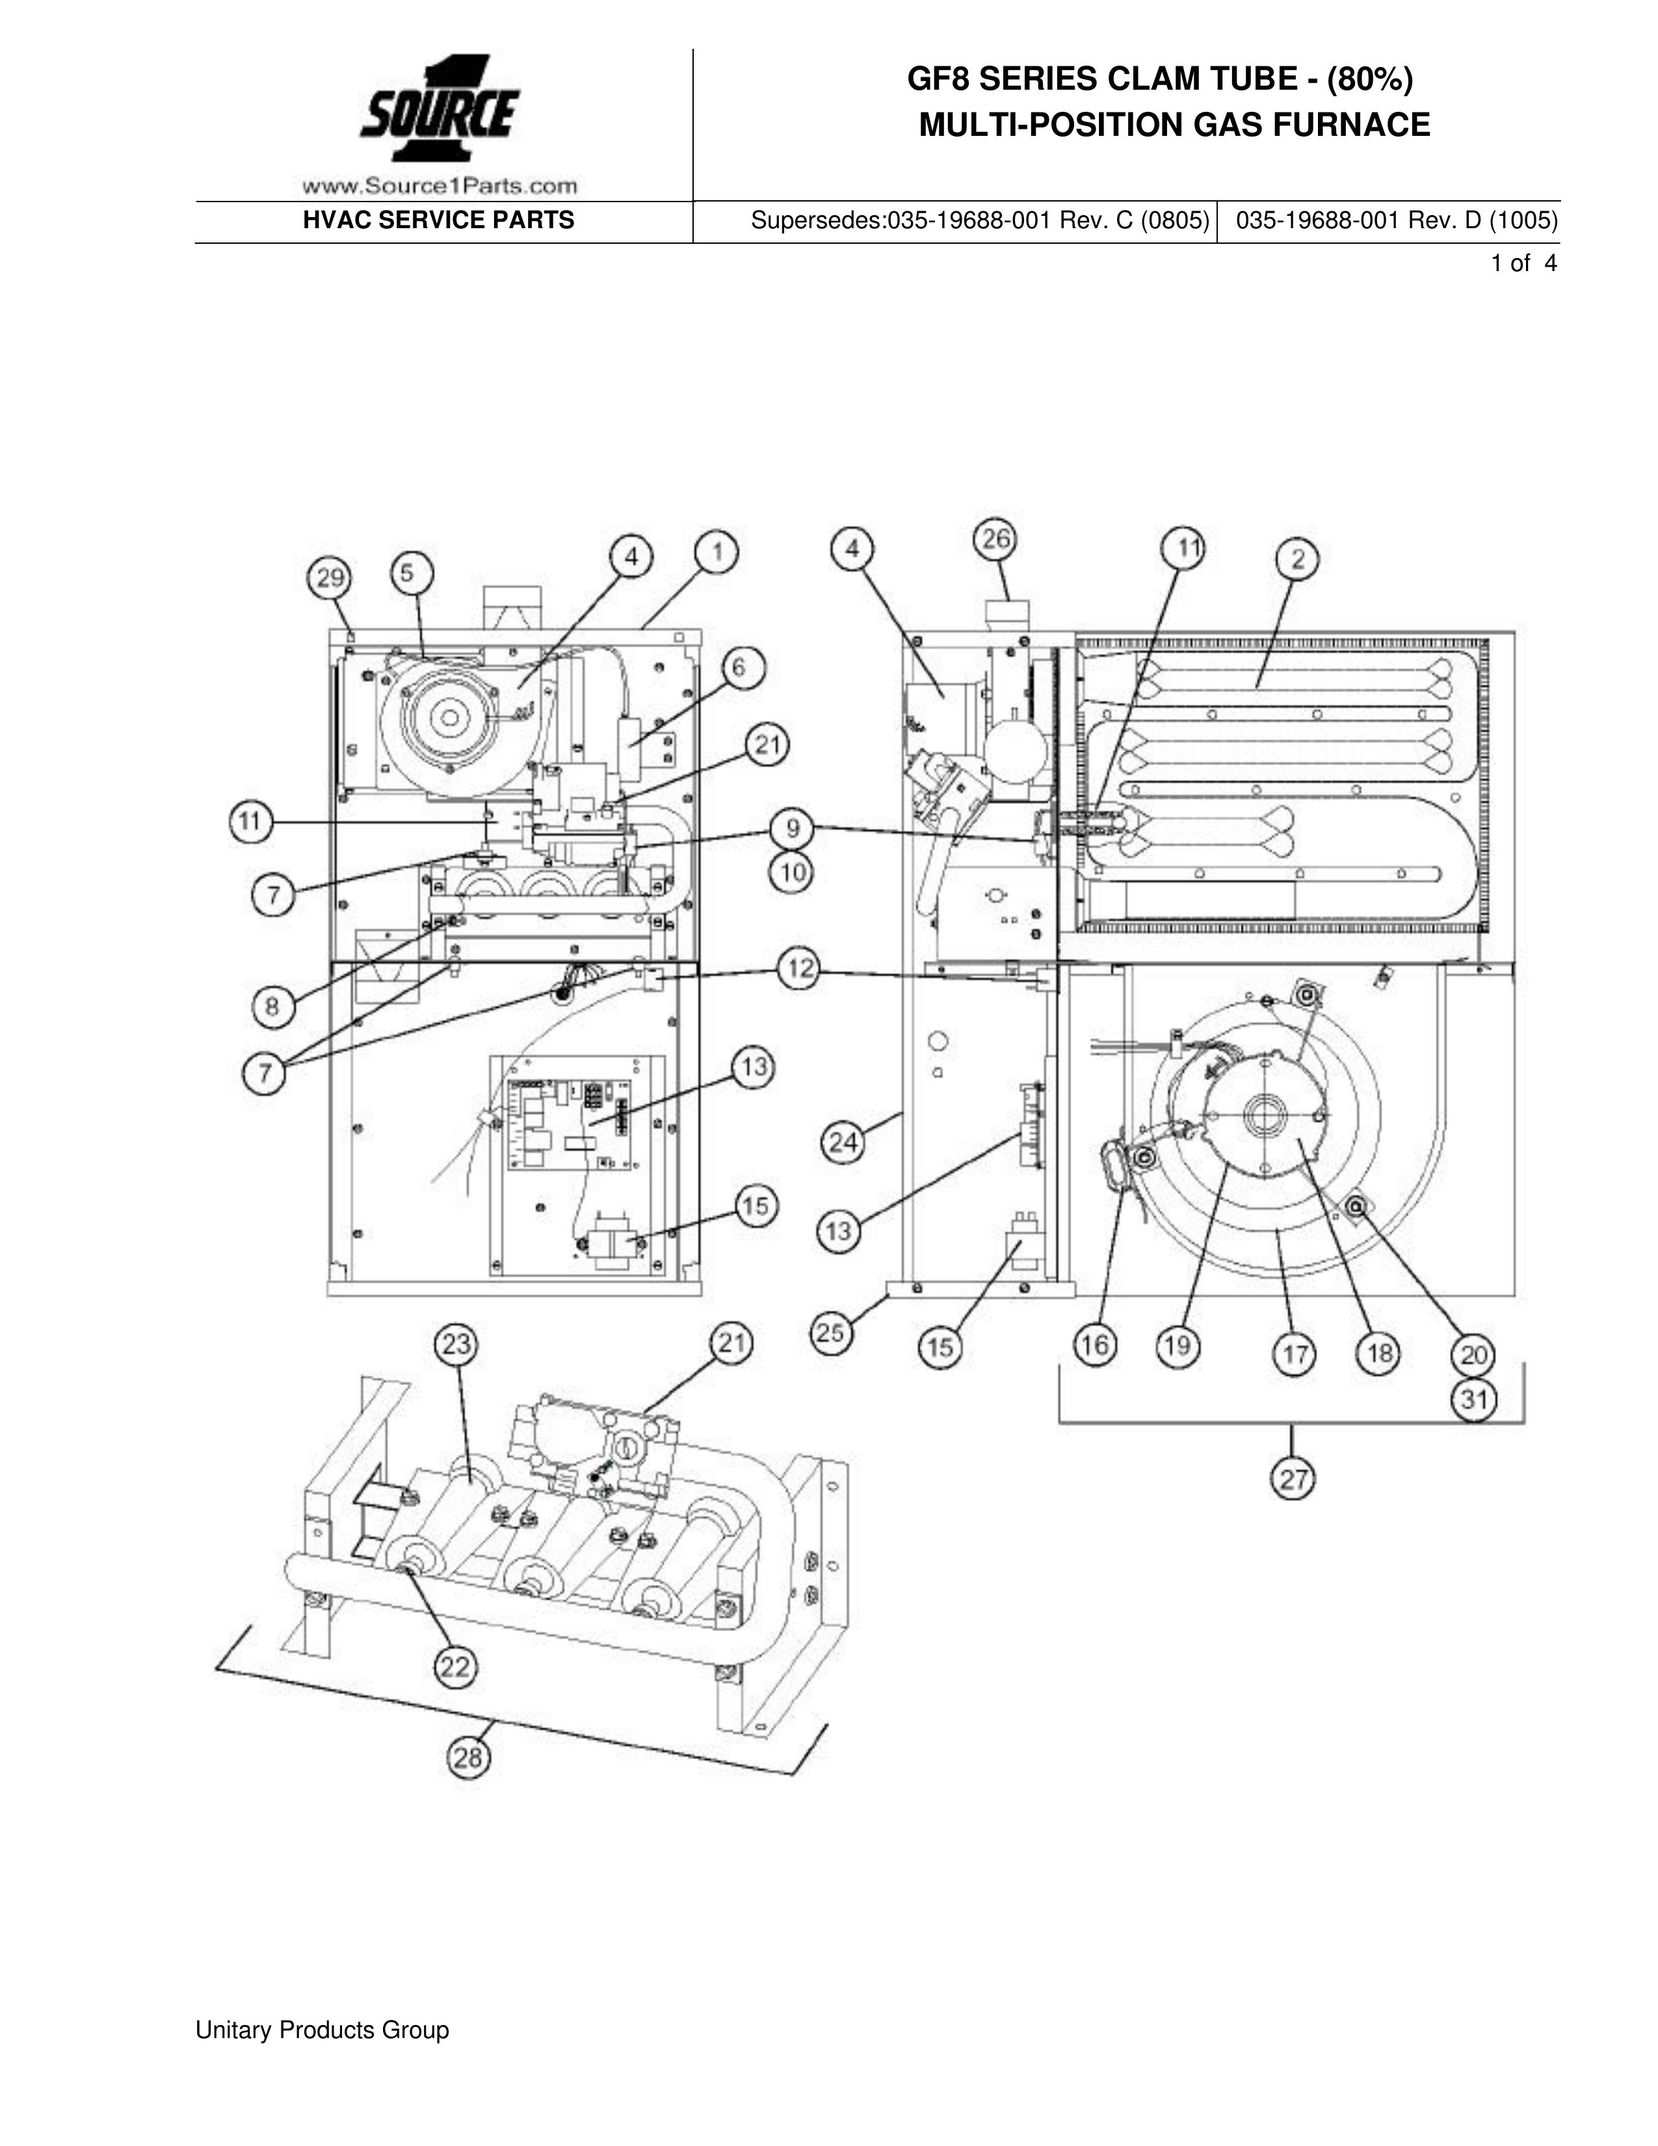 AirComm Corporation 10016 Furnace User Manual